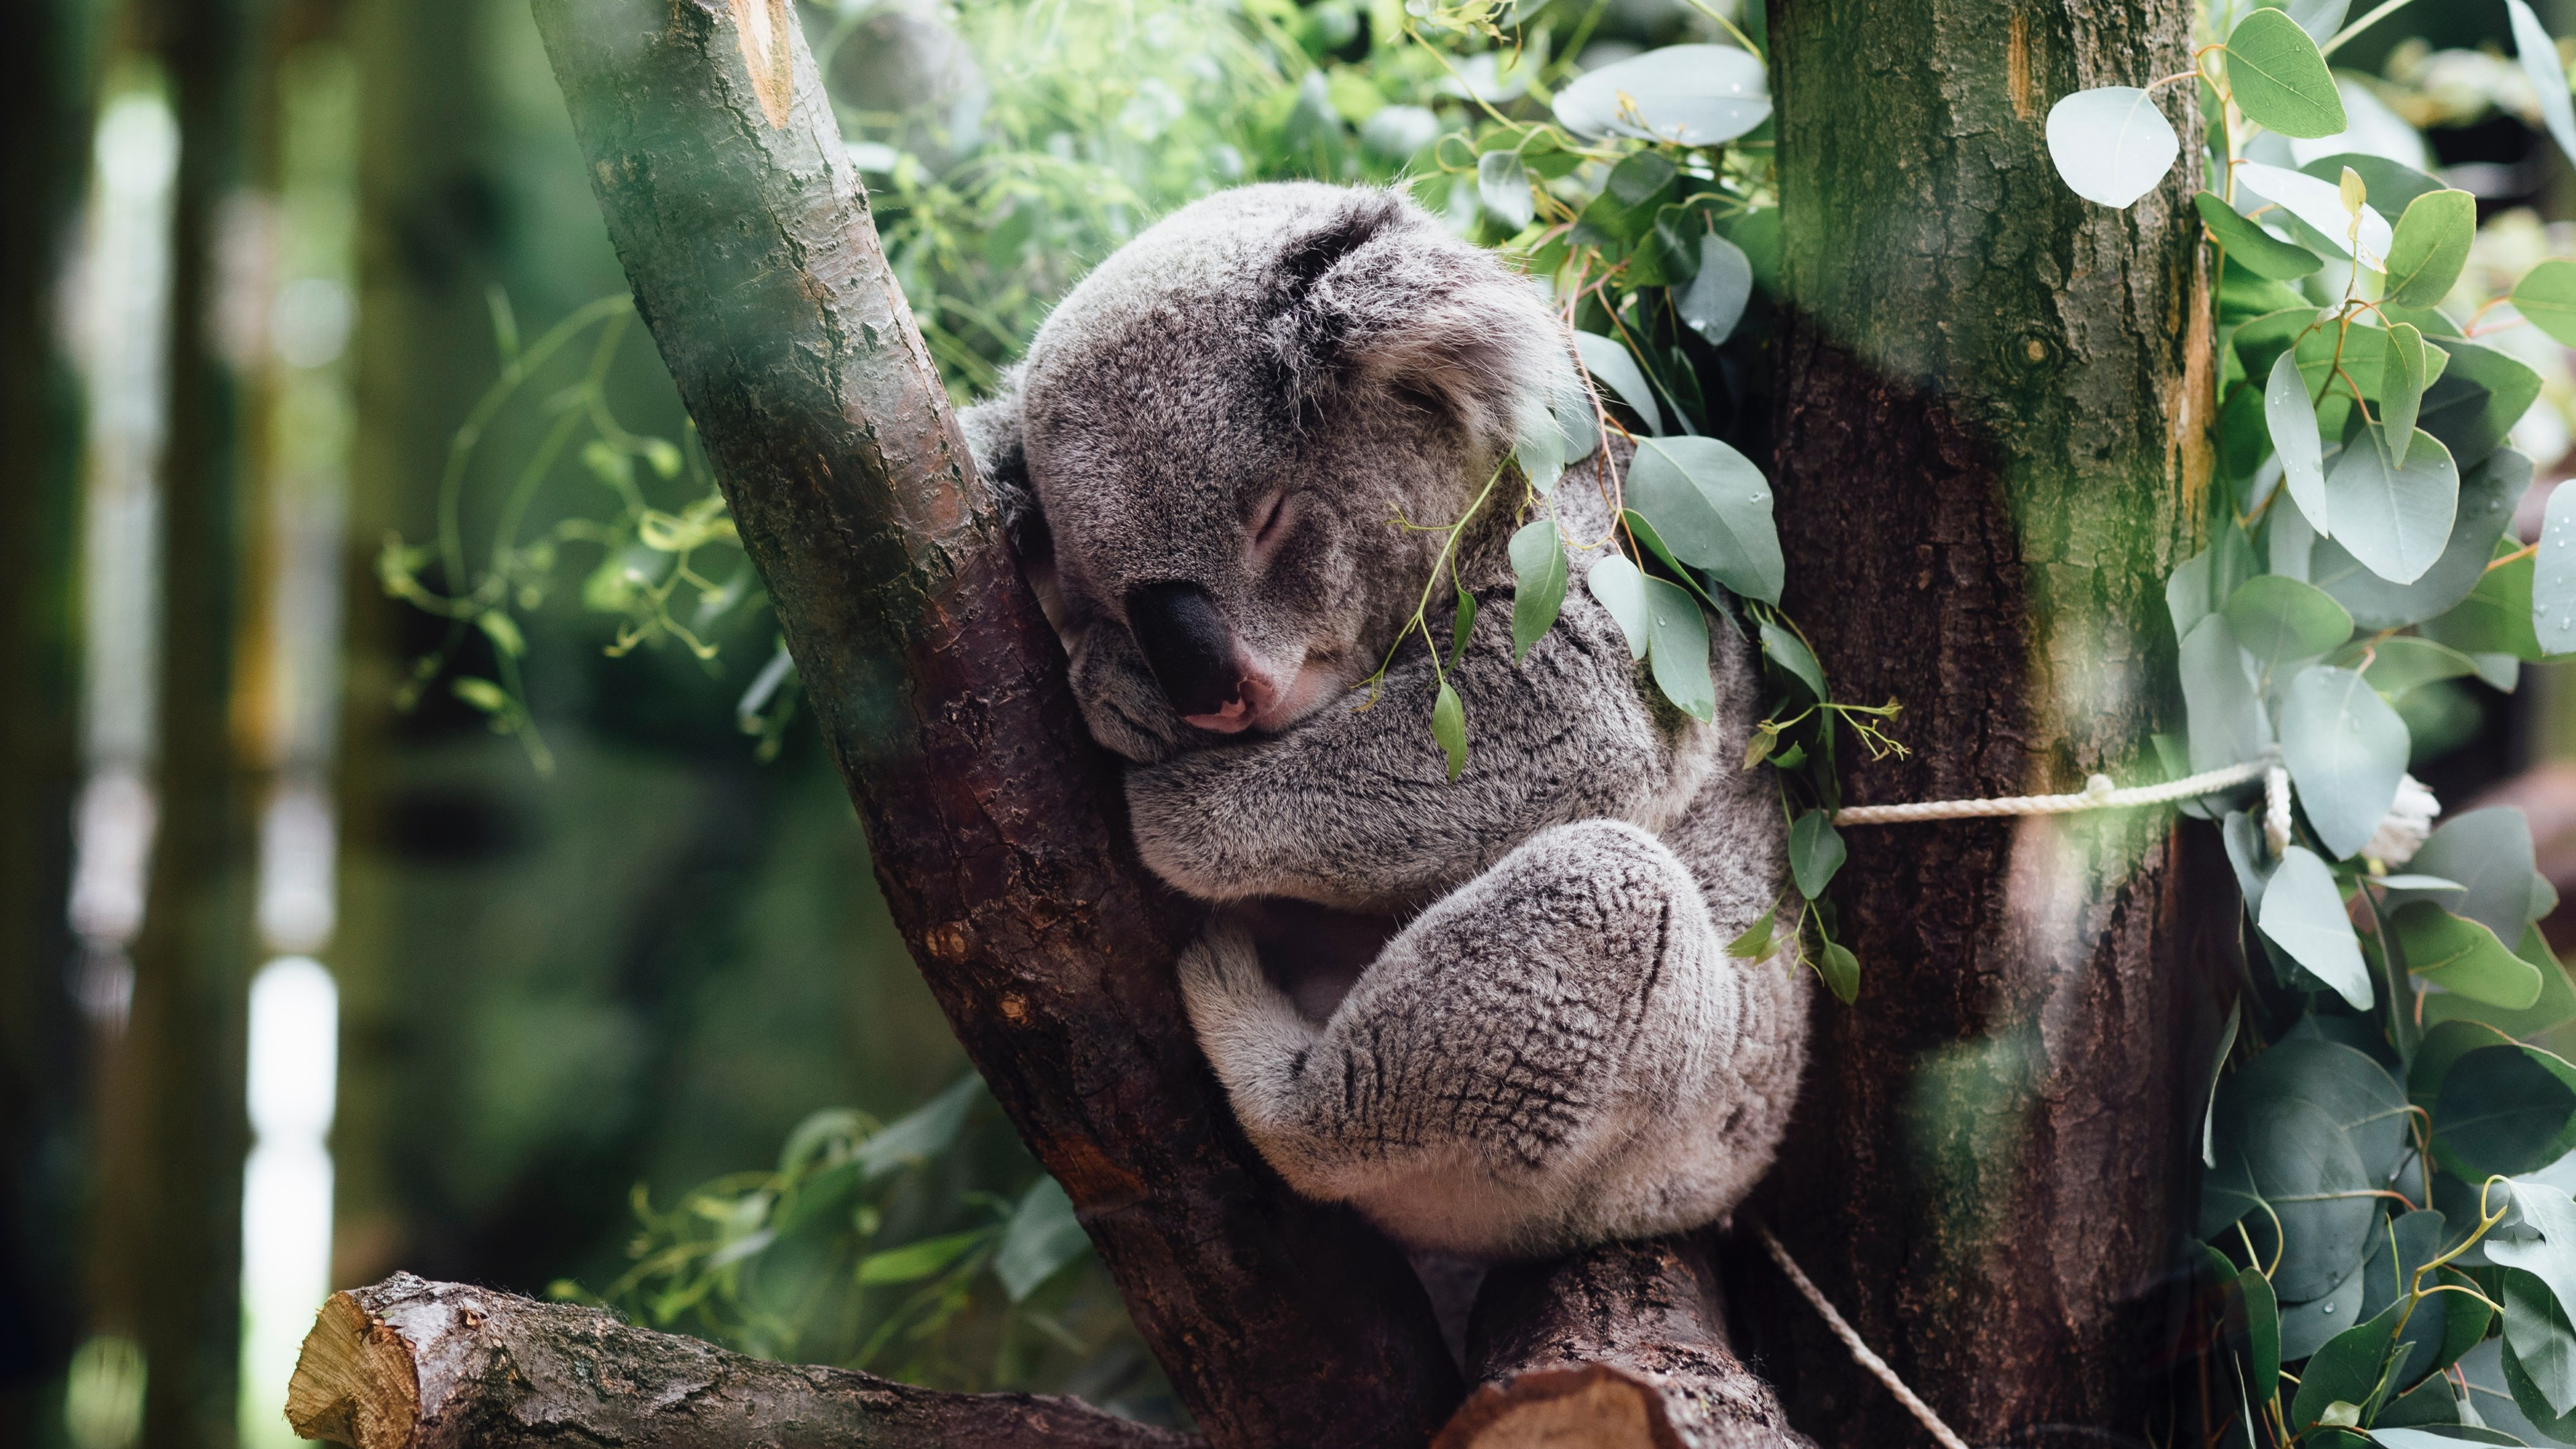 Download wallpaper: Koala bear 3840x2160